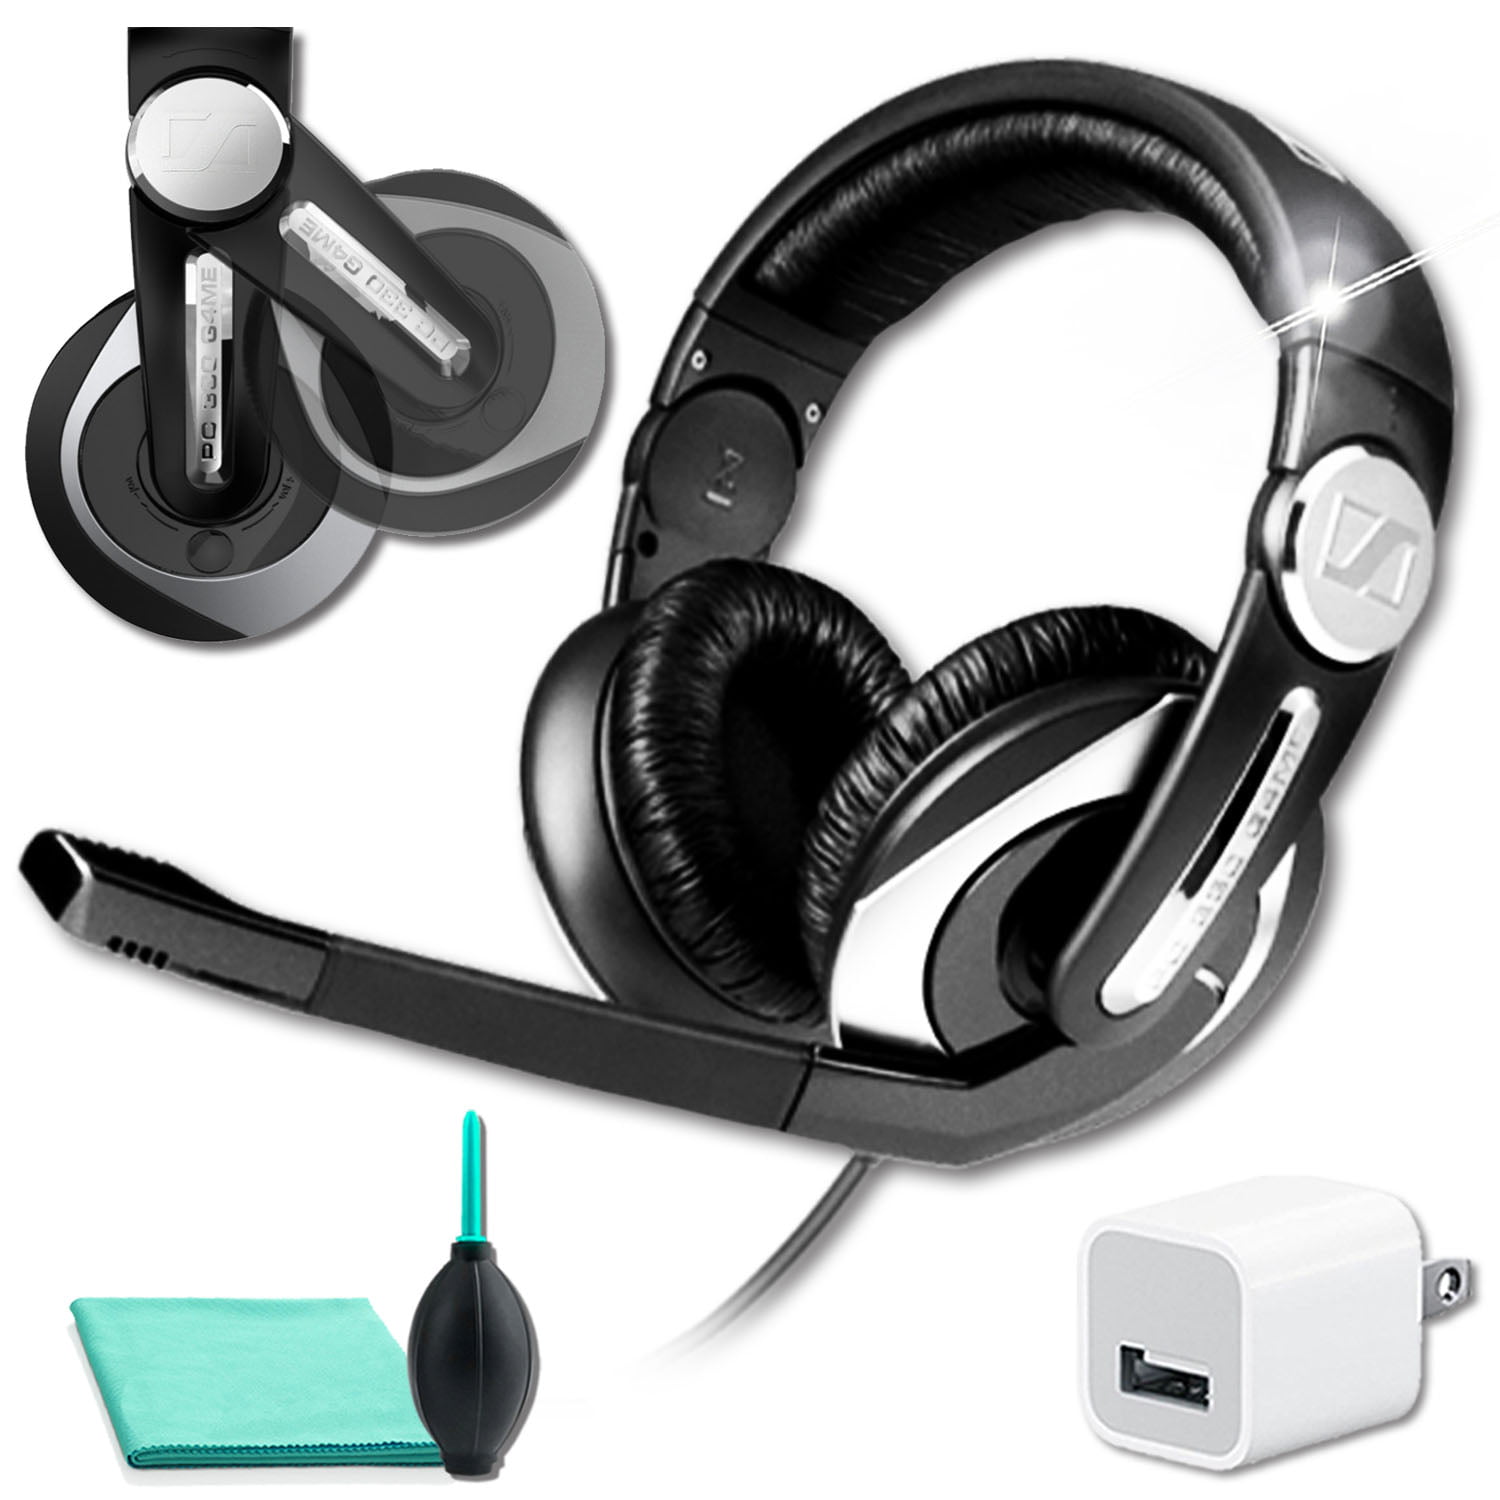 lenen vertel het me Merchandising Sennheiser PC 330 Gaming Headset with Noise Canceling Microphone Bundle -  Walmart.com